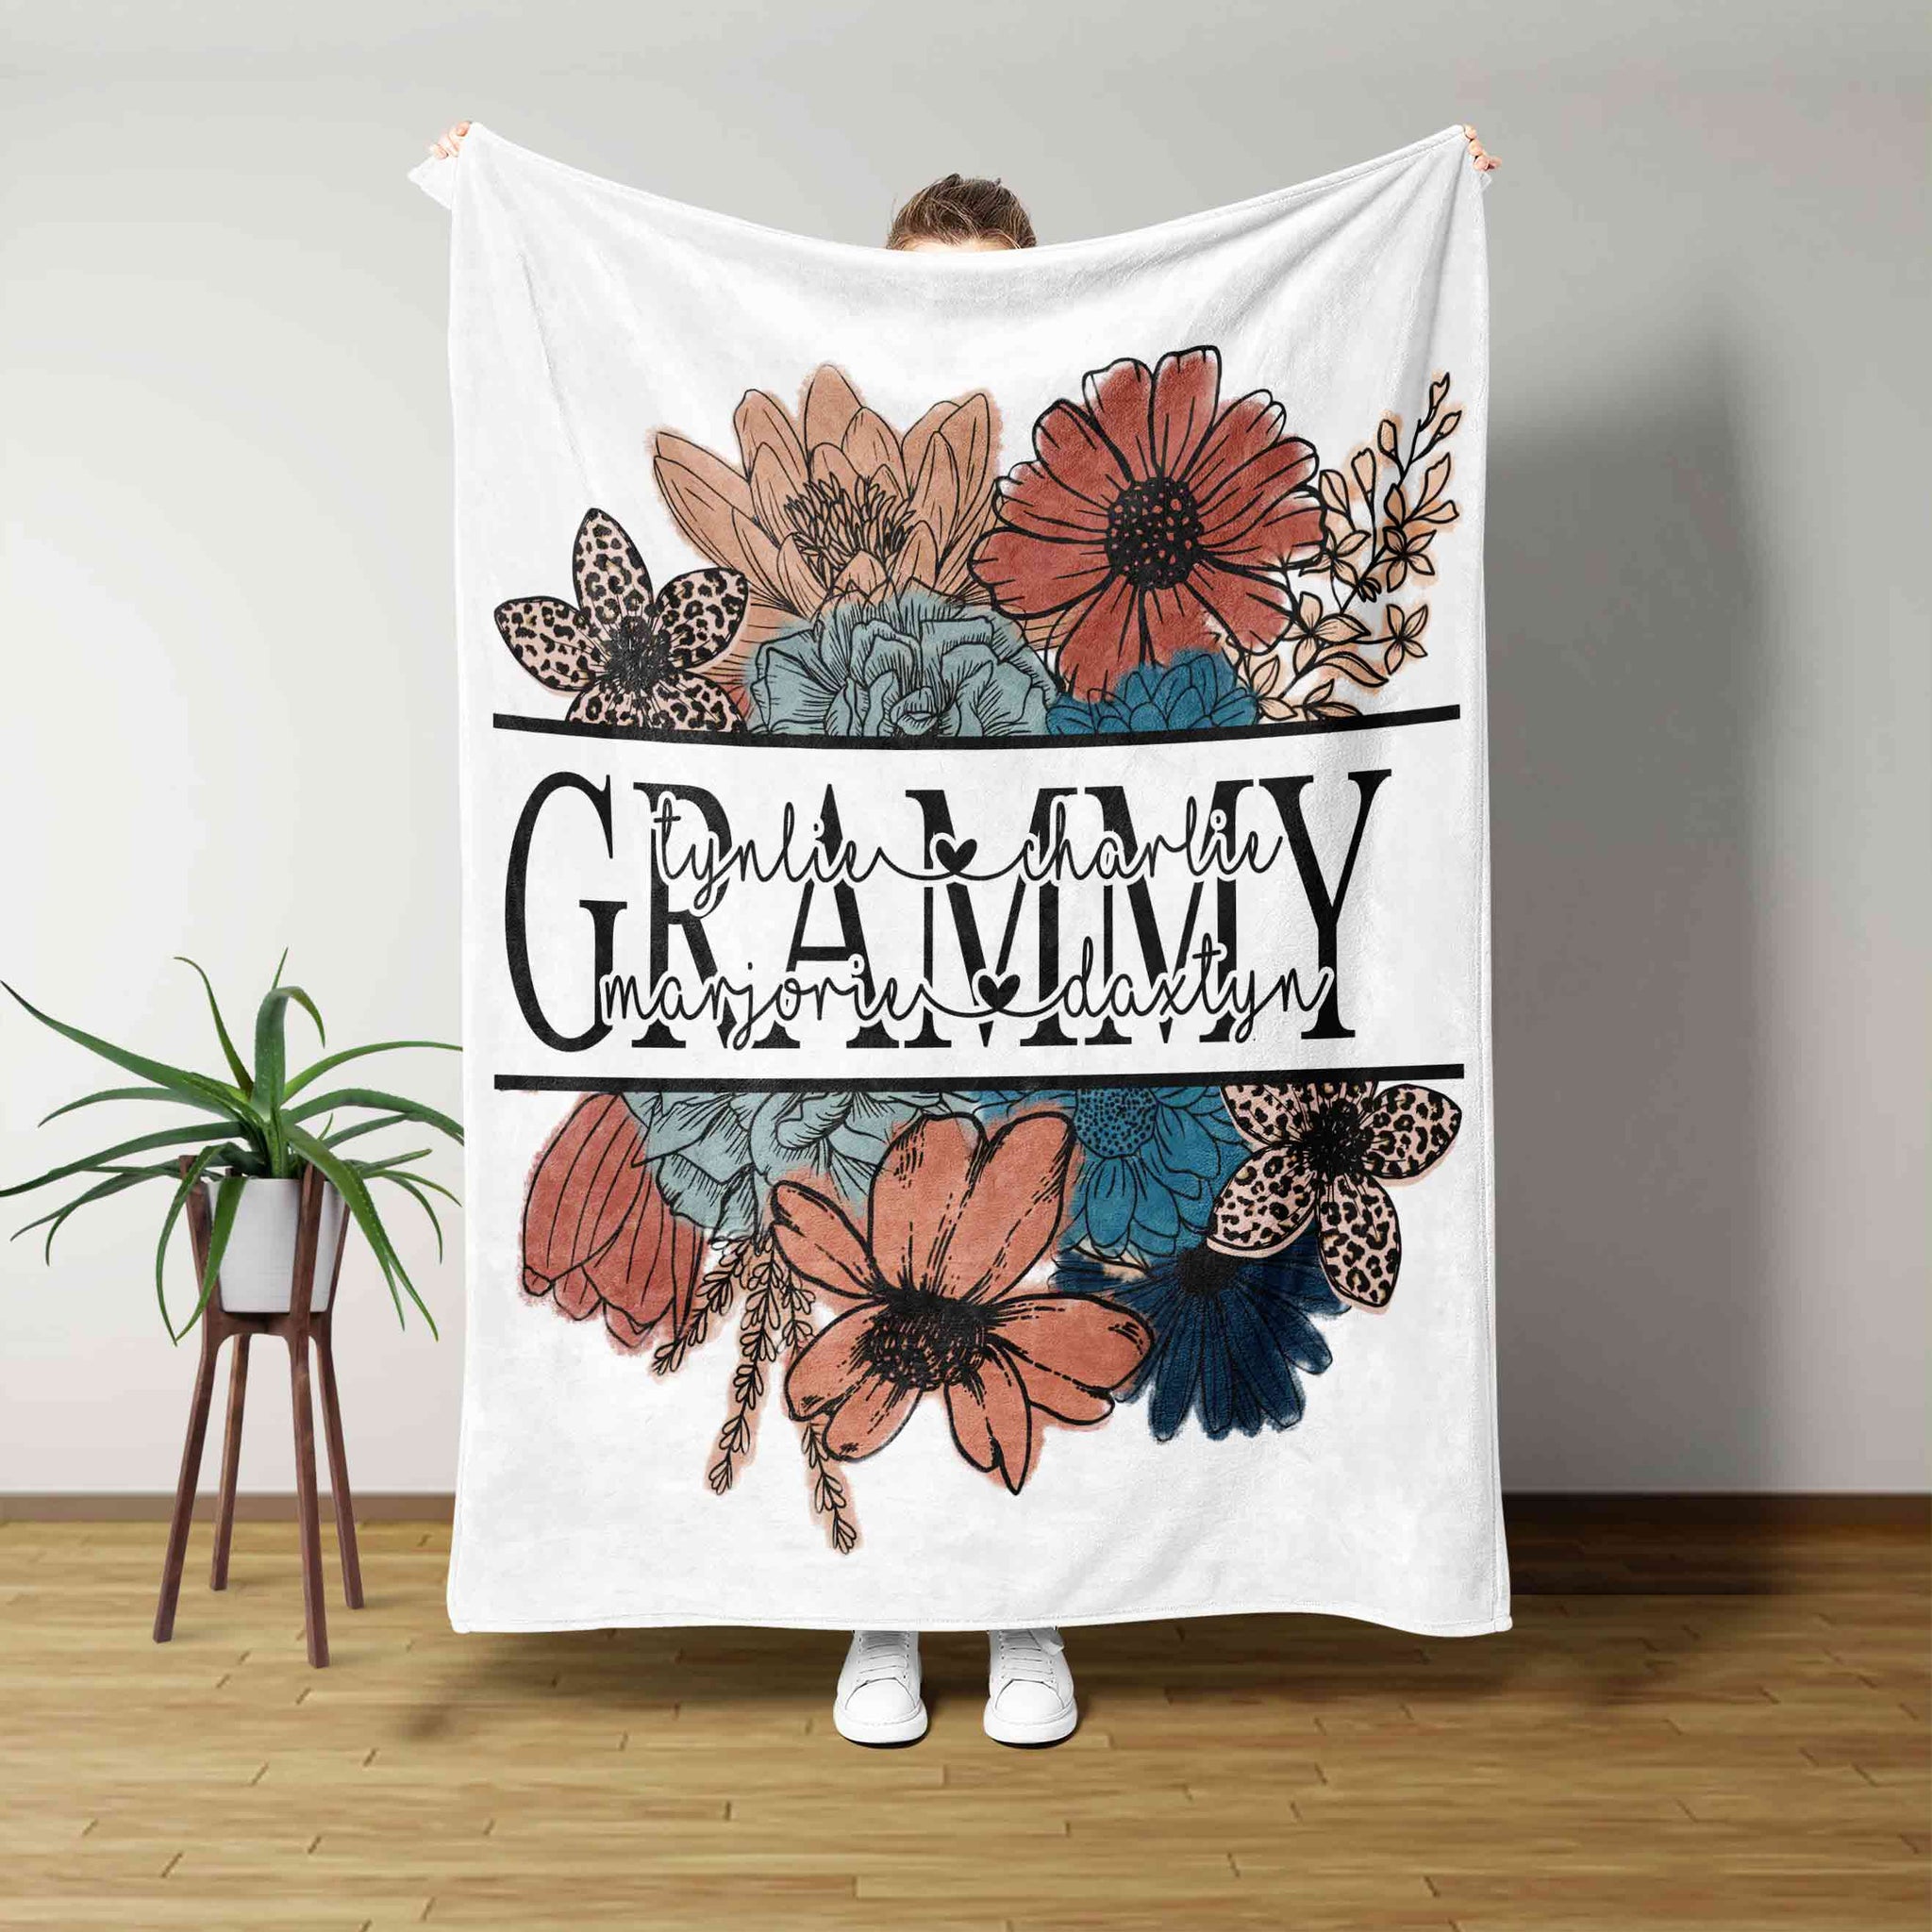 Personalized Name Blanket, Grammy Blanket, Flower Blanket, Family Blanket, Gift Blanket